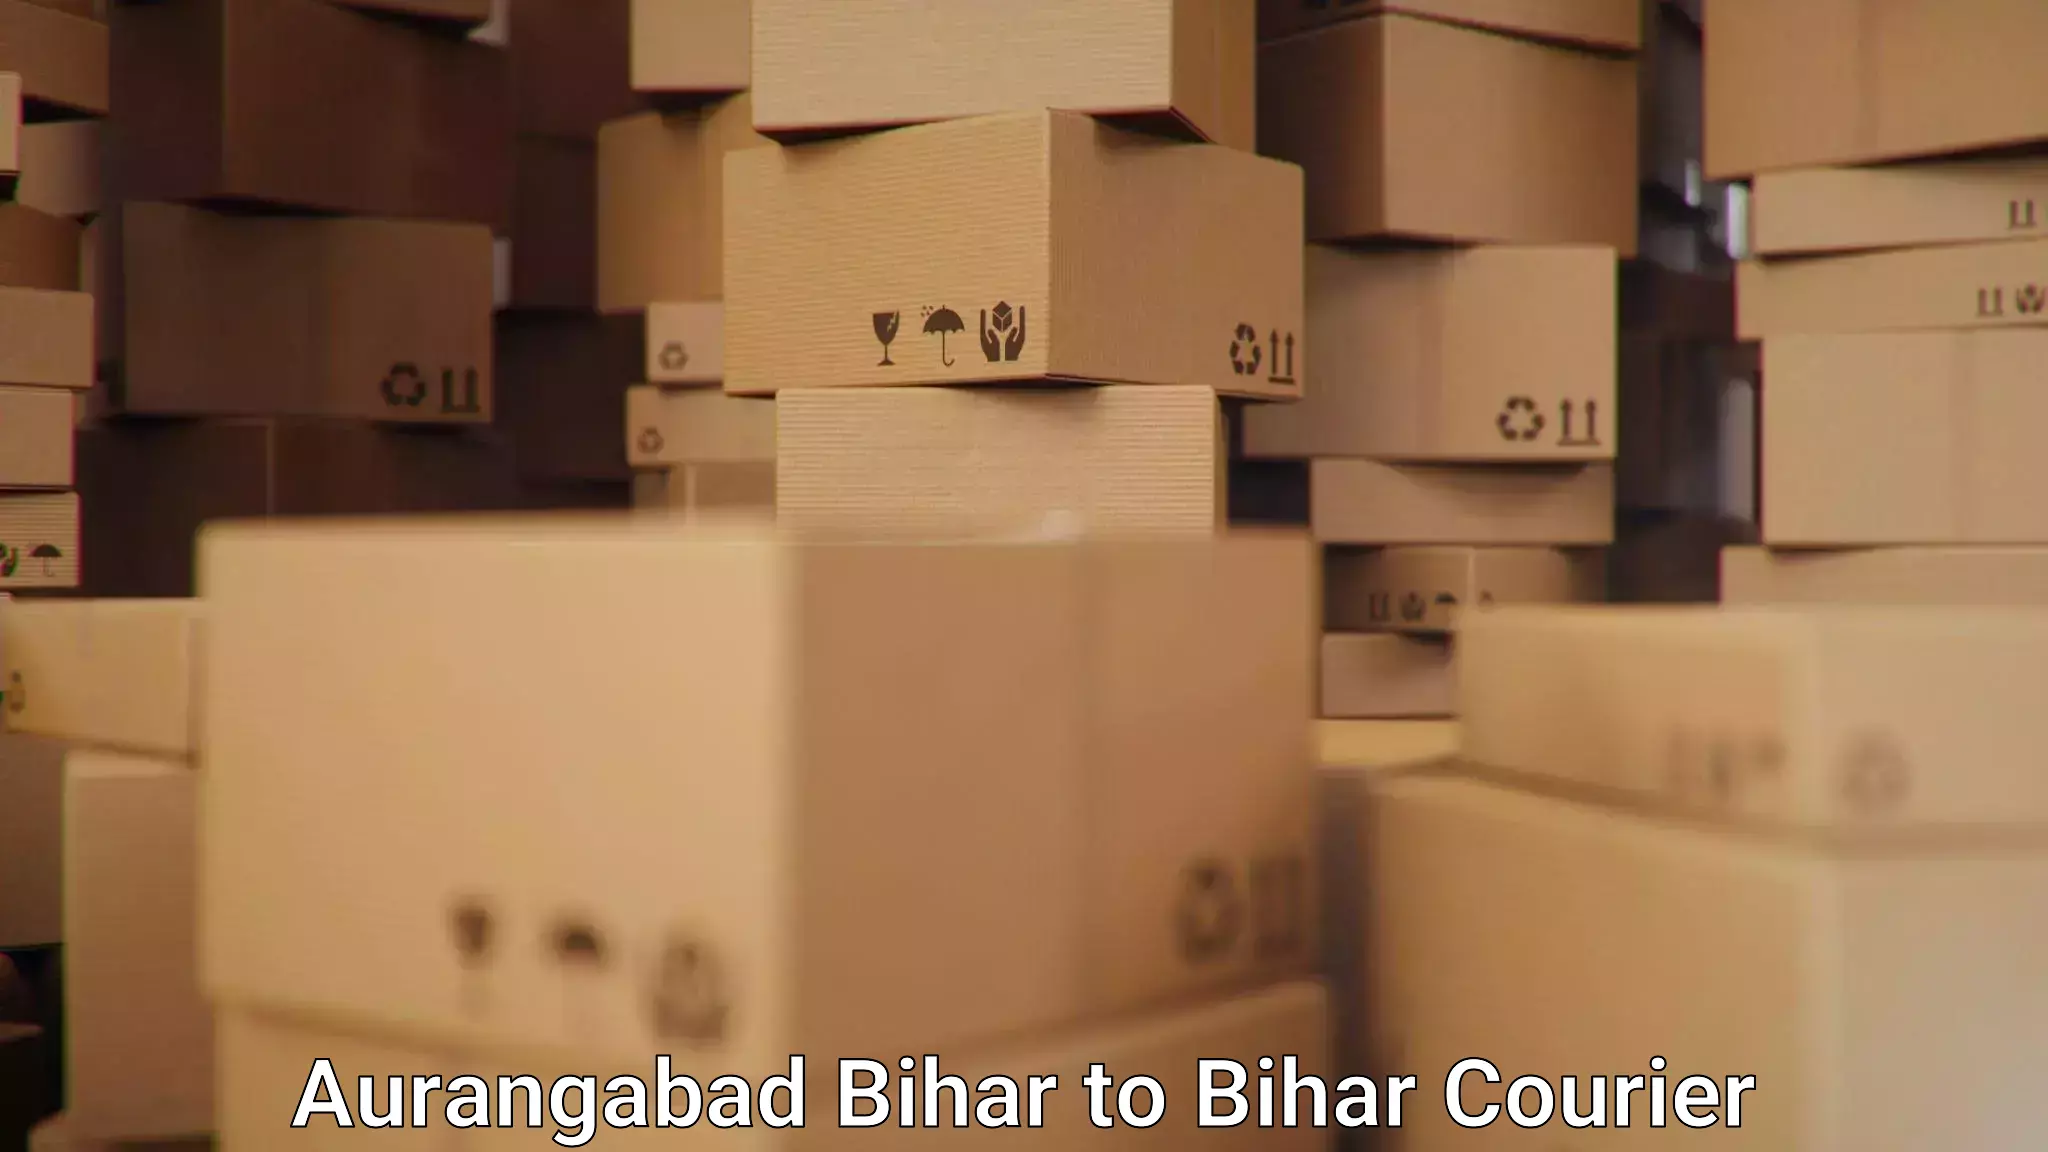 Courier services Aurangabad Bihar to Munger